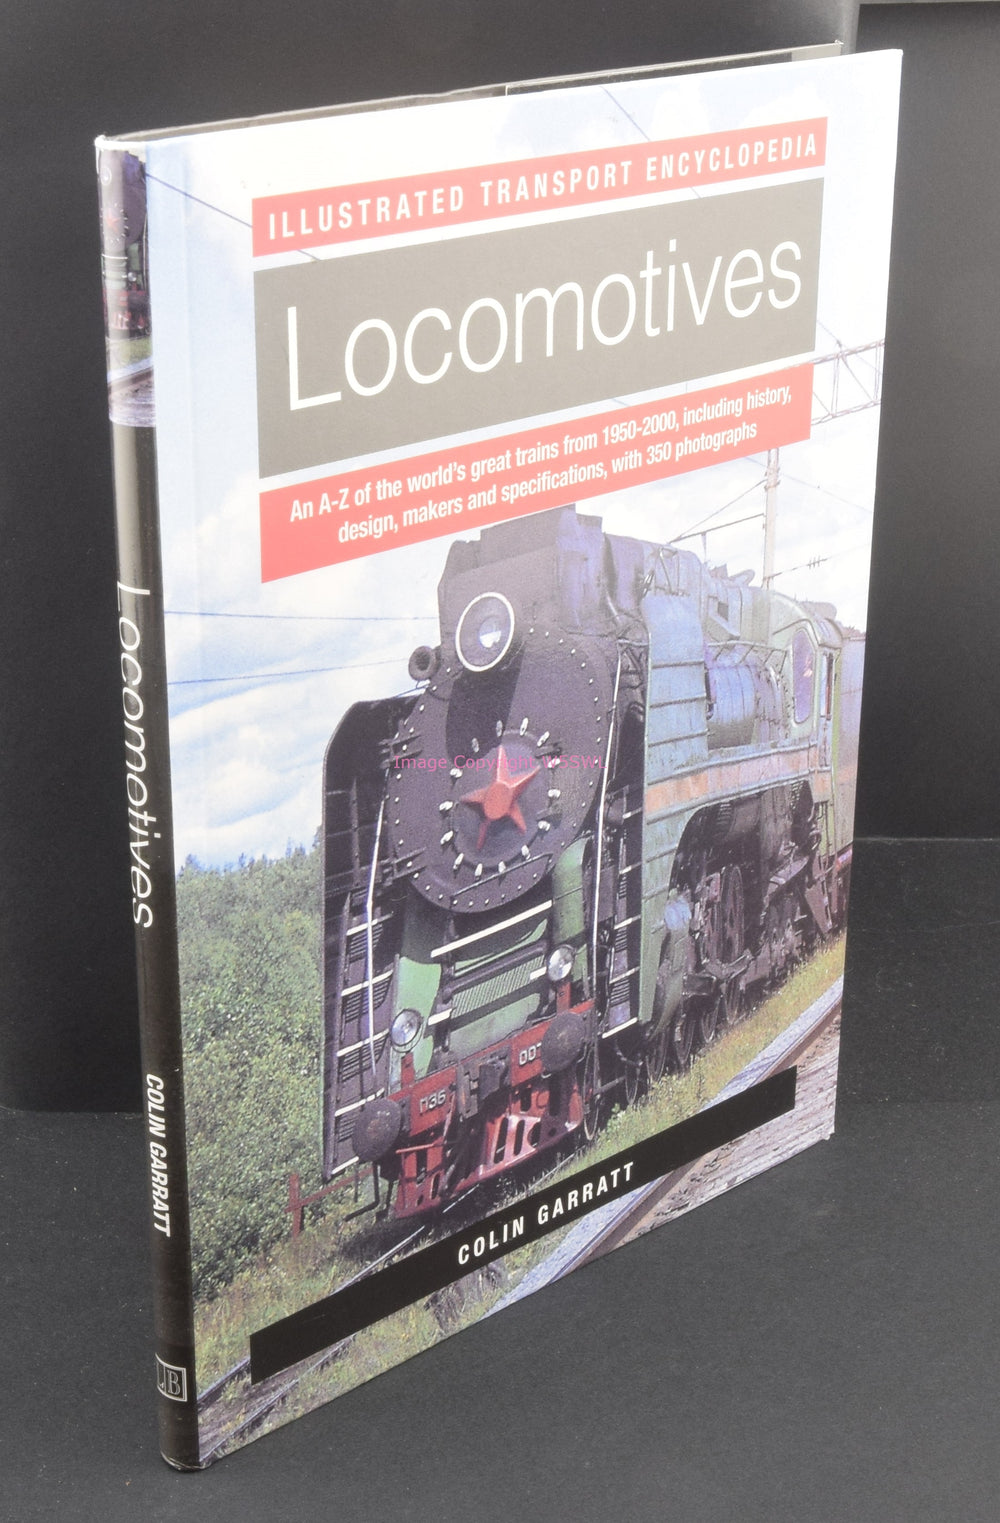 Locomotives by Colin Garratt - Dave's Hobby Shop by W5SWL